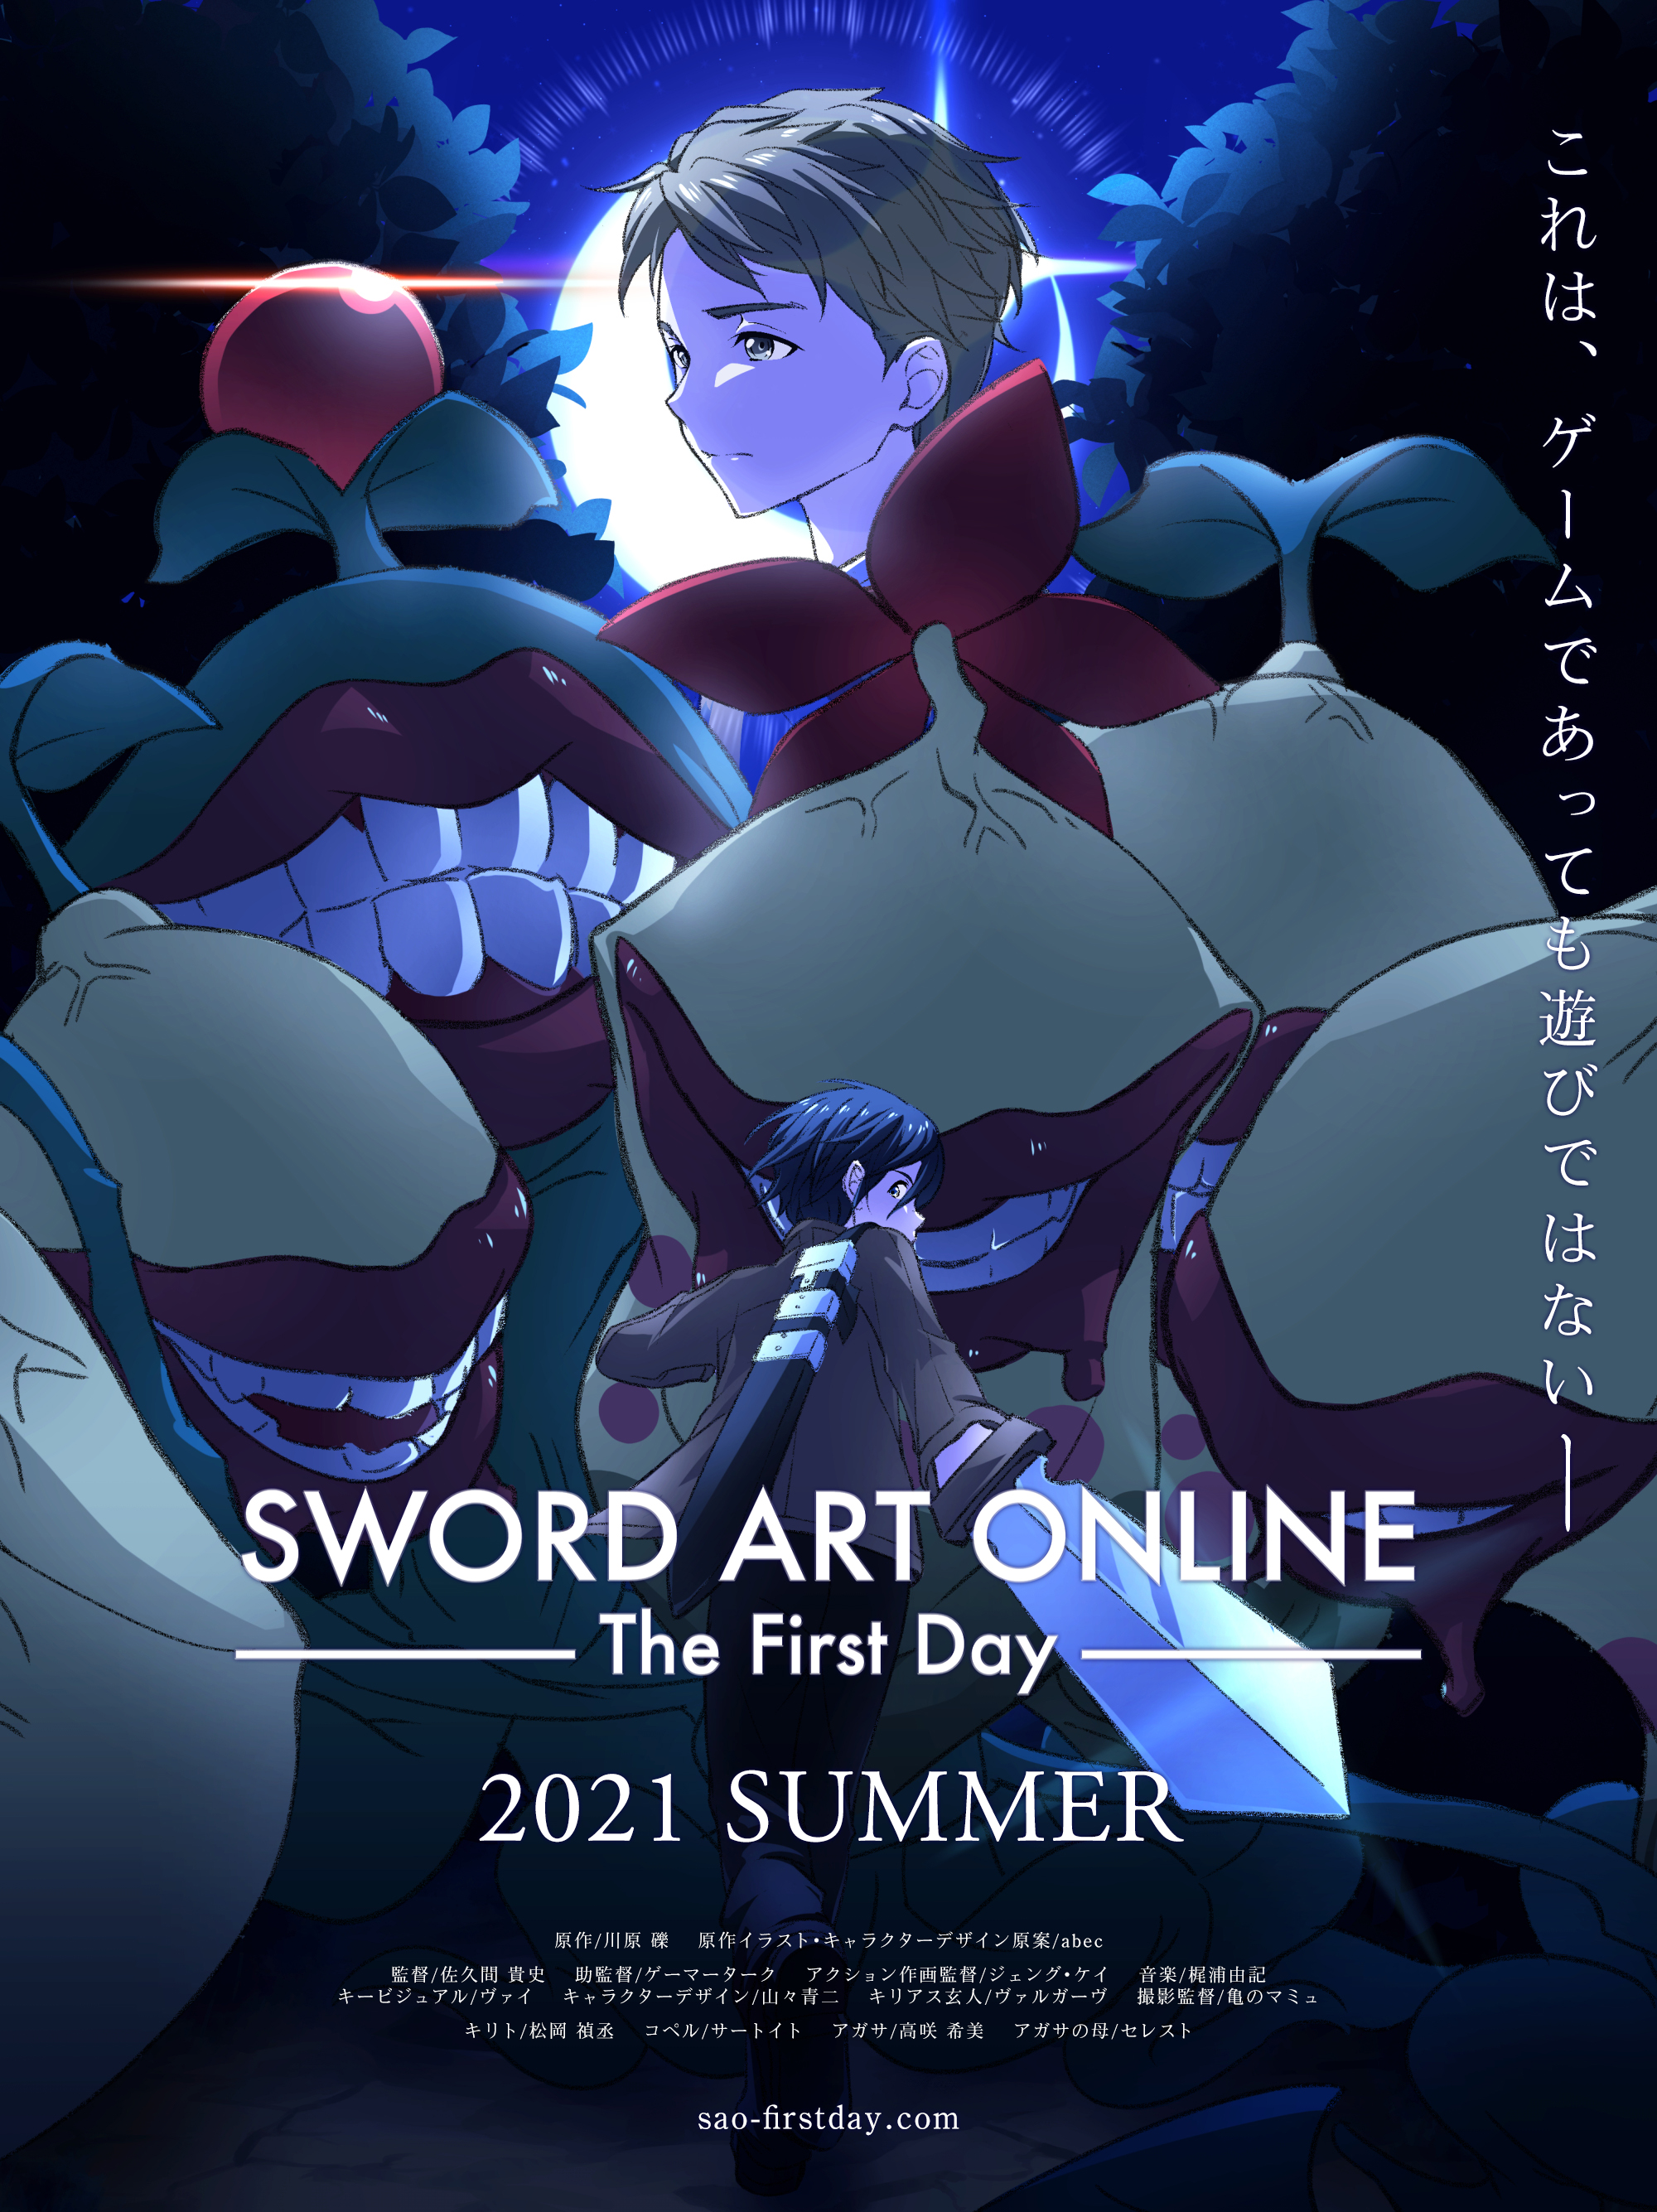 Sword Art Online: Progressive Anime Adaptation Announced